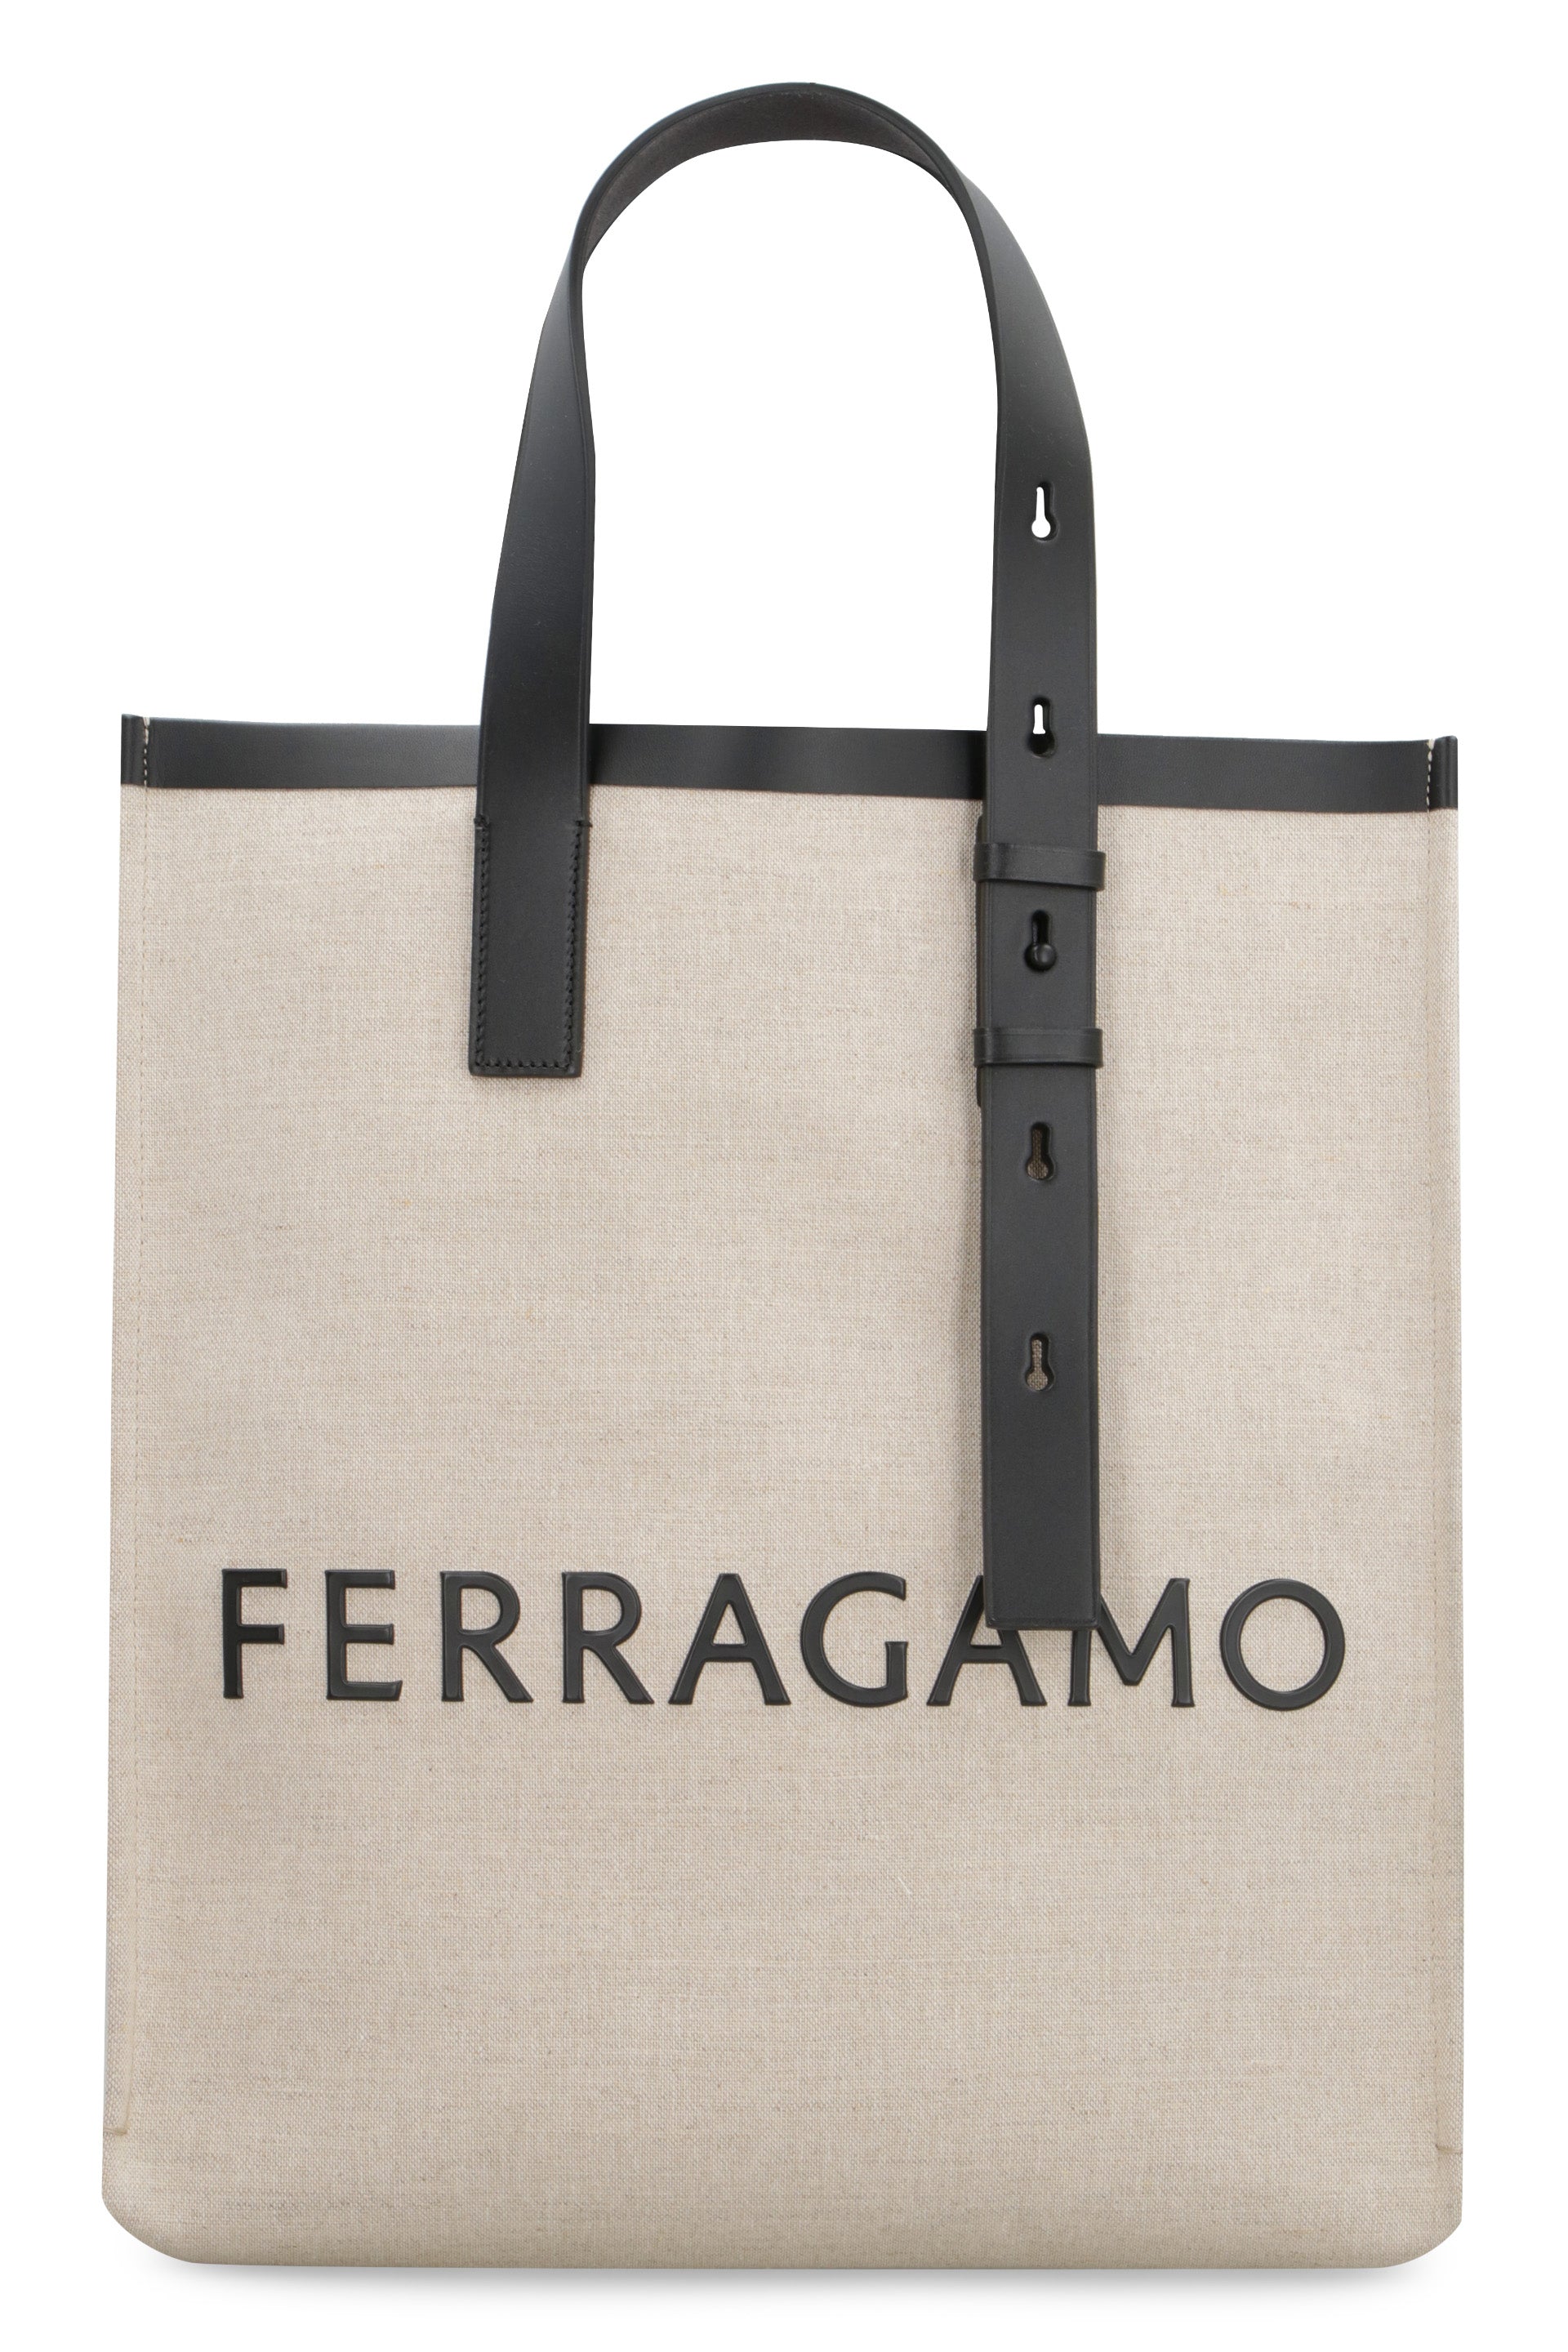 Shop Ferragamo Men's Canvas Tote Handbag With Leather Details And Adjustable Handles In Ecru